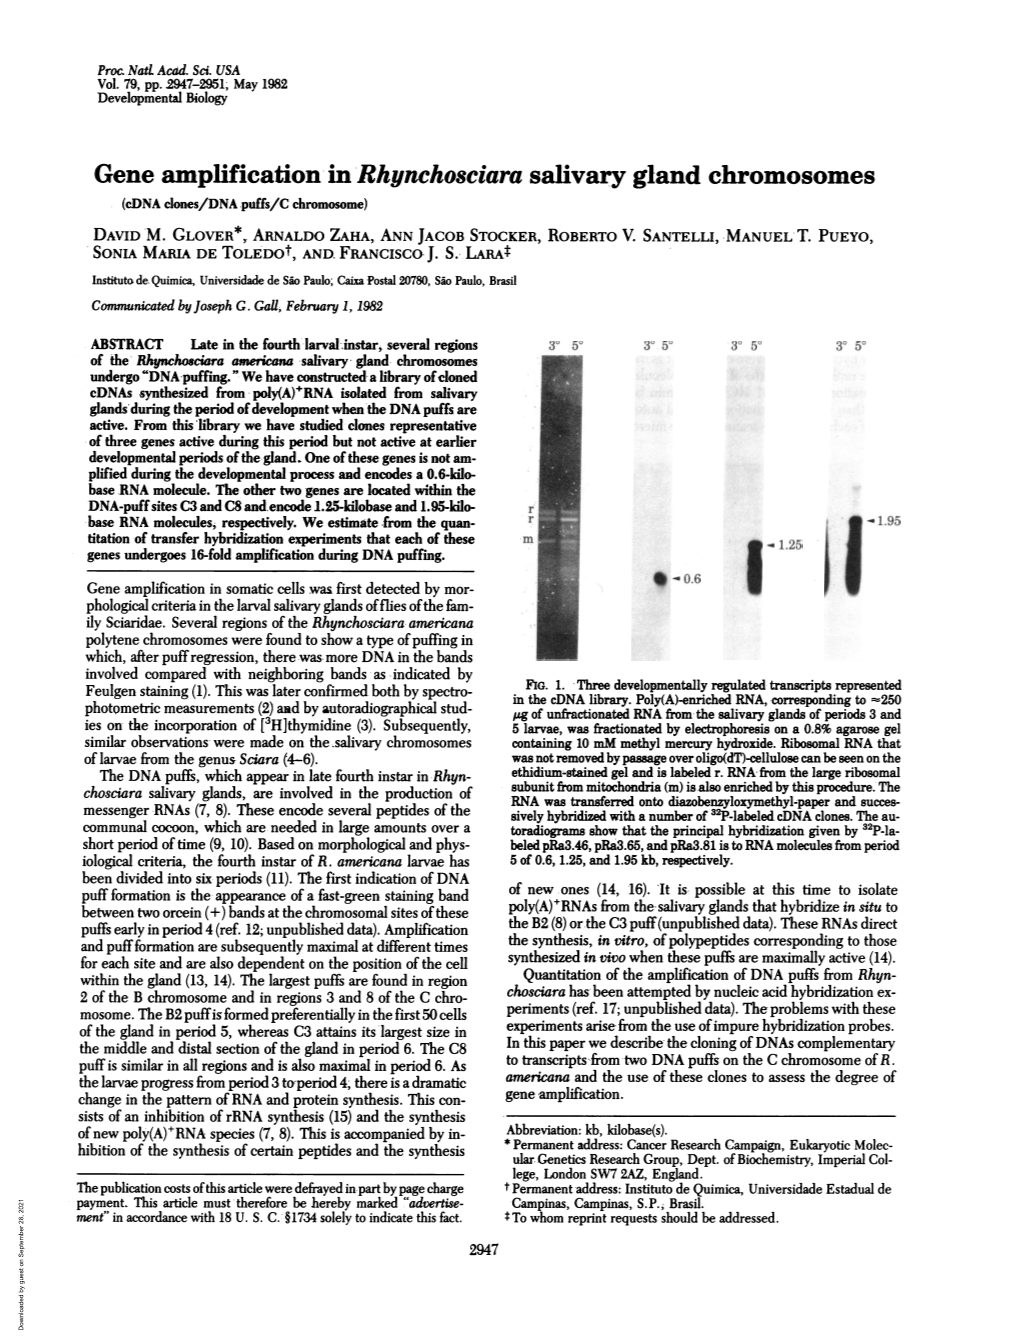 Gene Amplification in Rhynchosciara Salivary Gland Chromosomes (Cdna Clones/DNA Puffs/C Chromosome) DAVID M